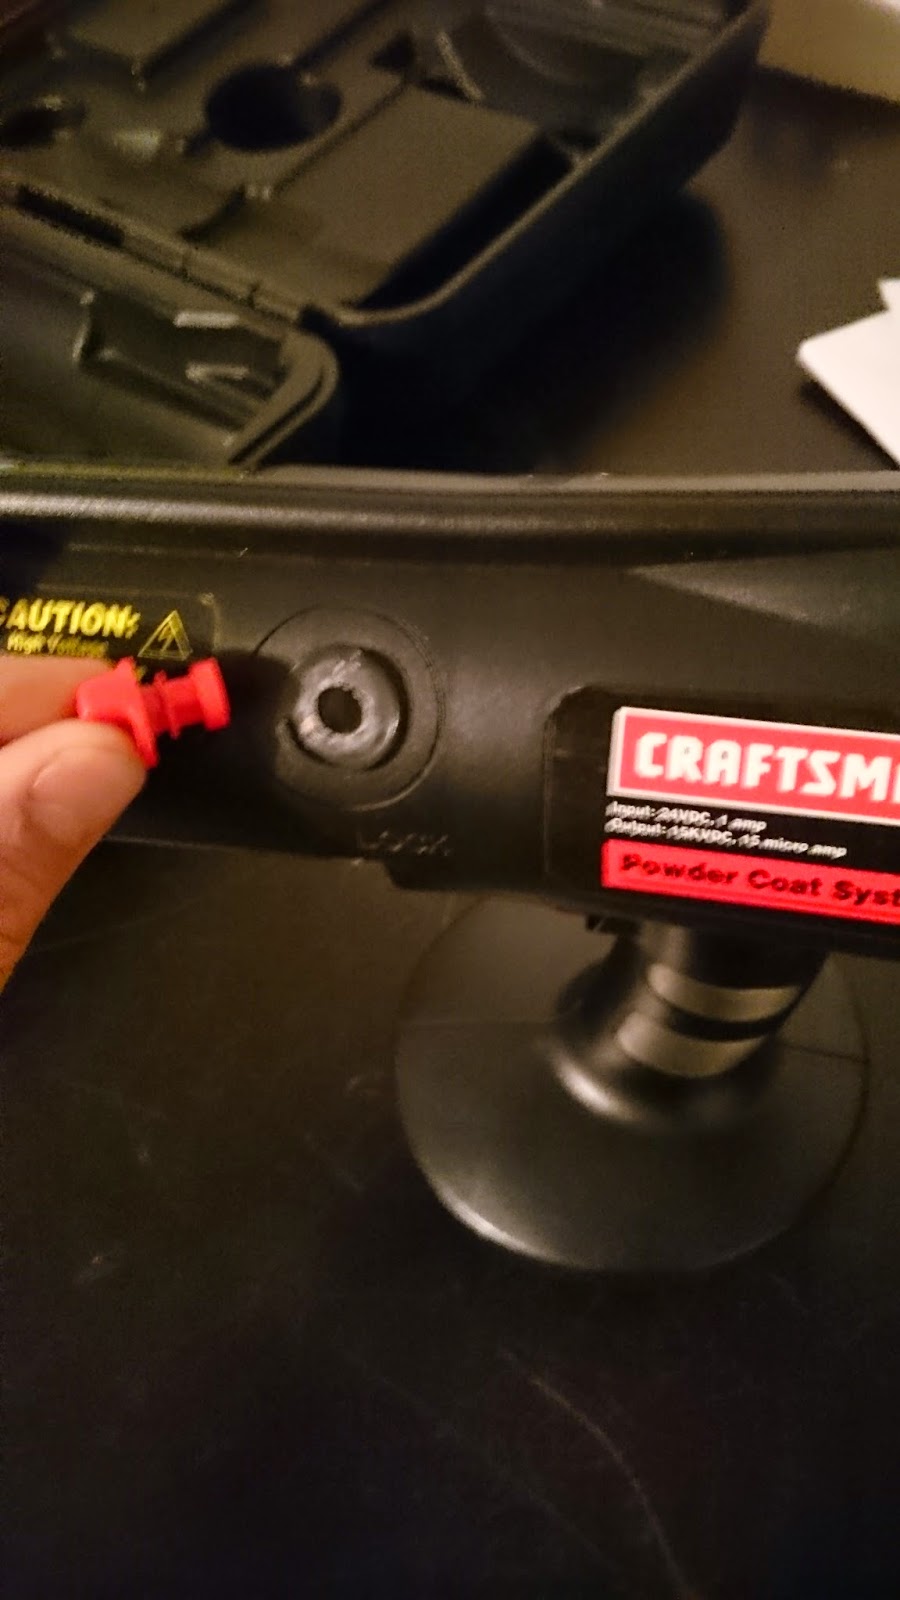 craftsman powder coating gun review broken